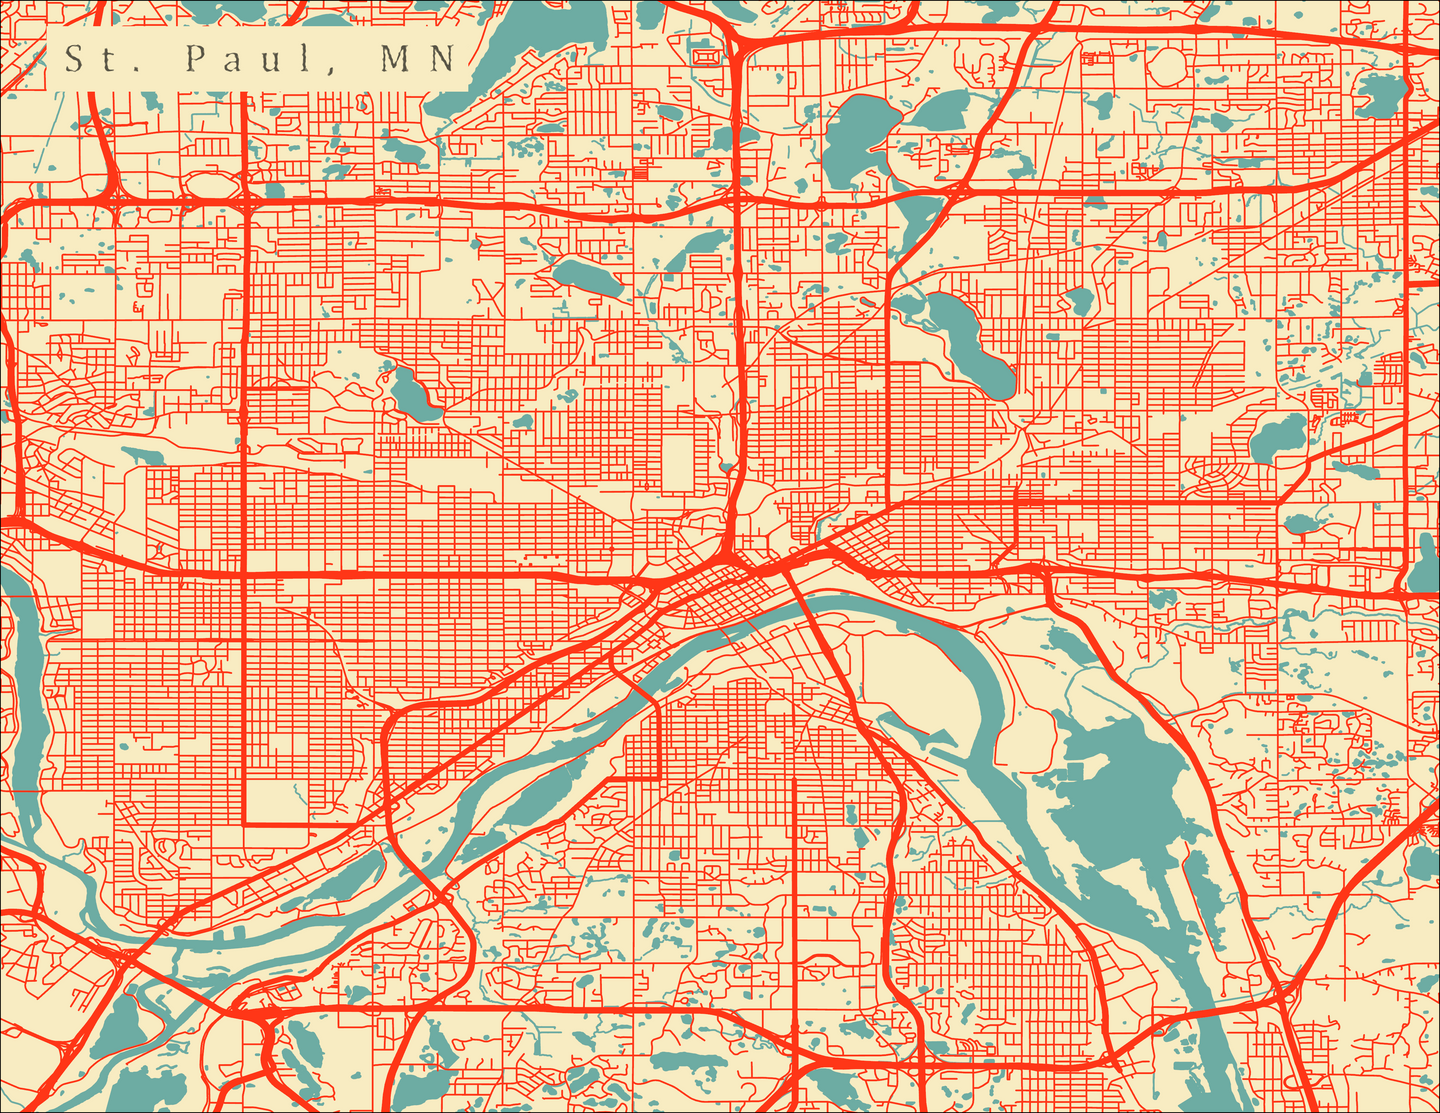 St Paul, MN City Map Print